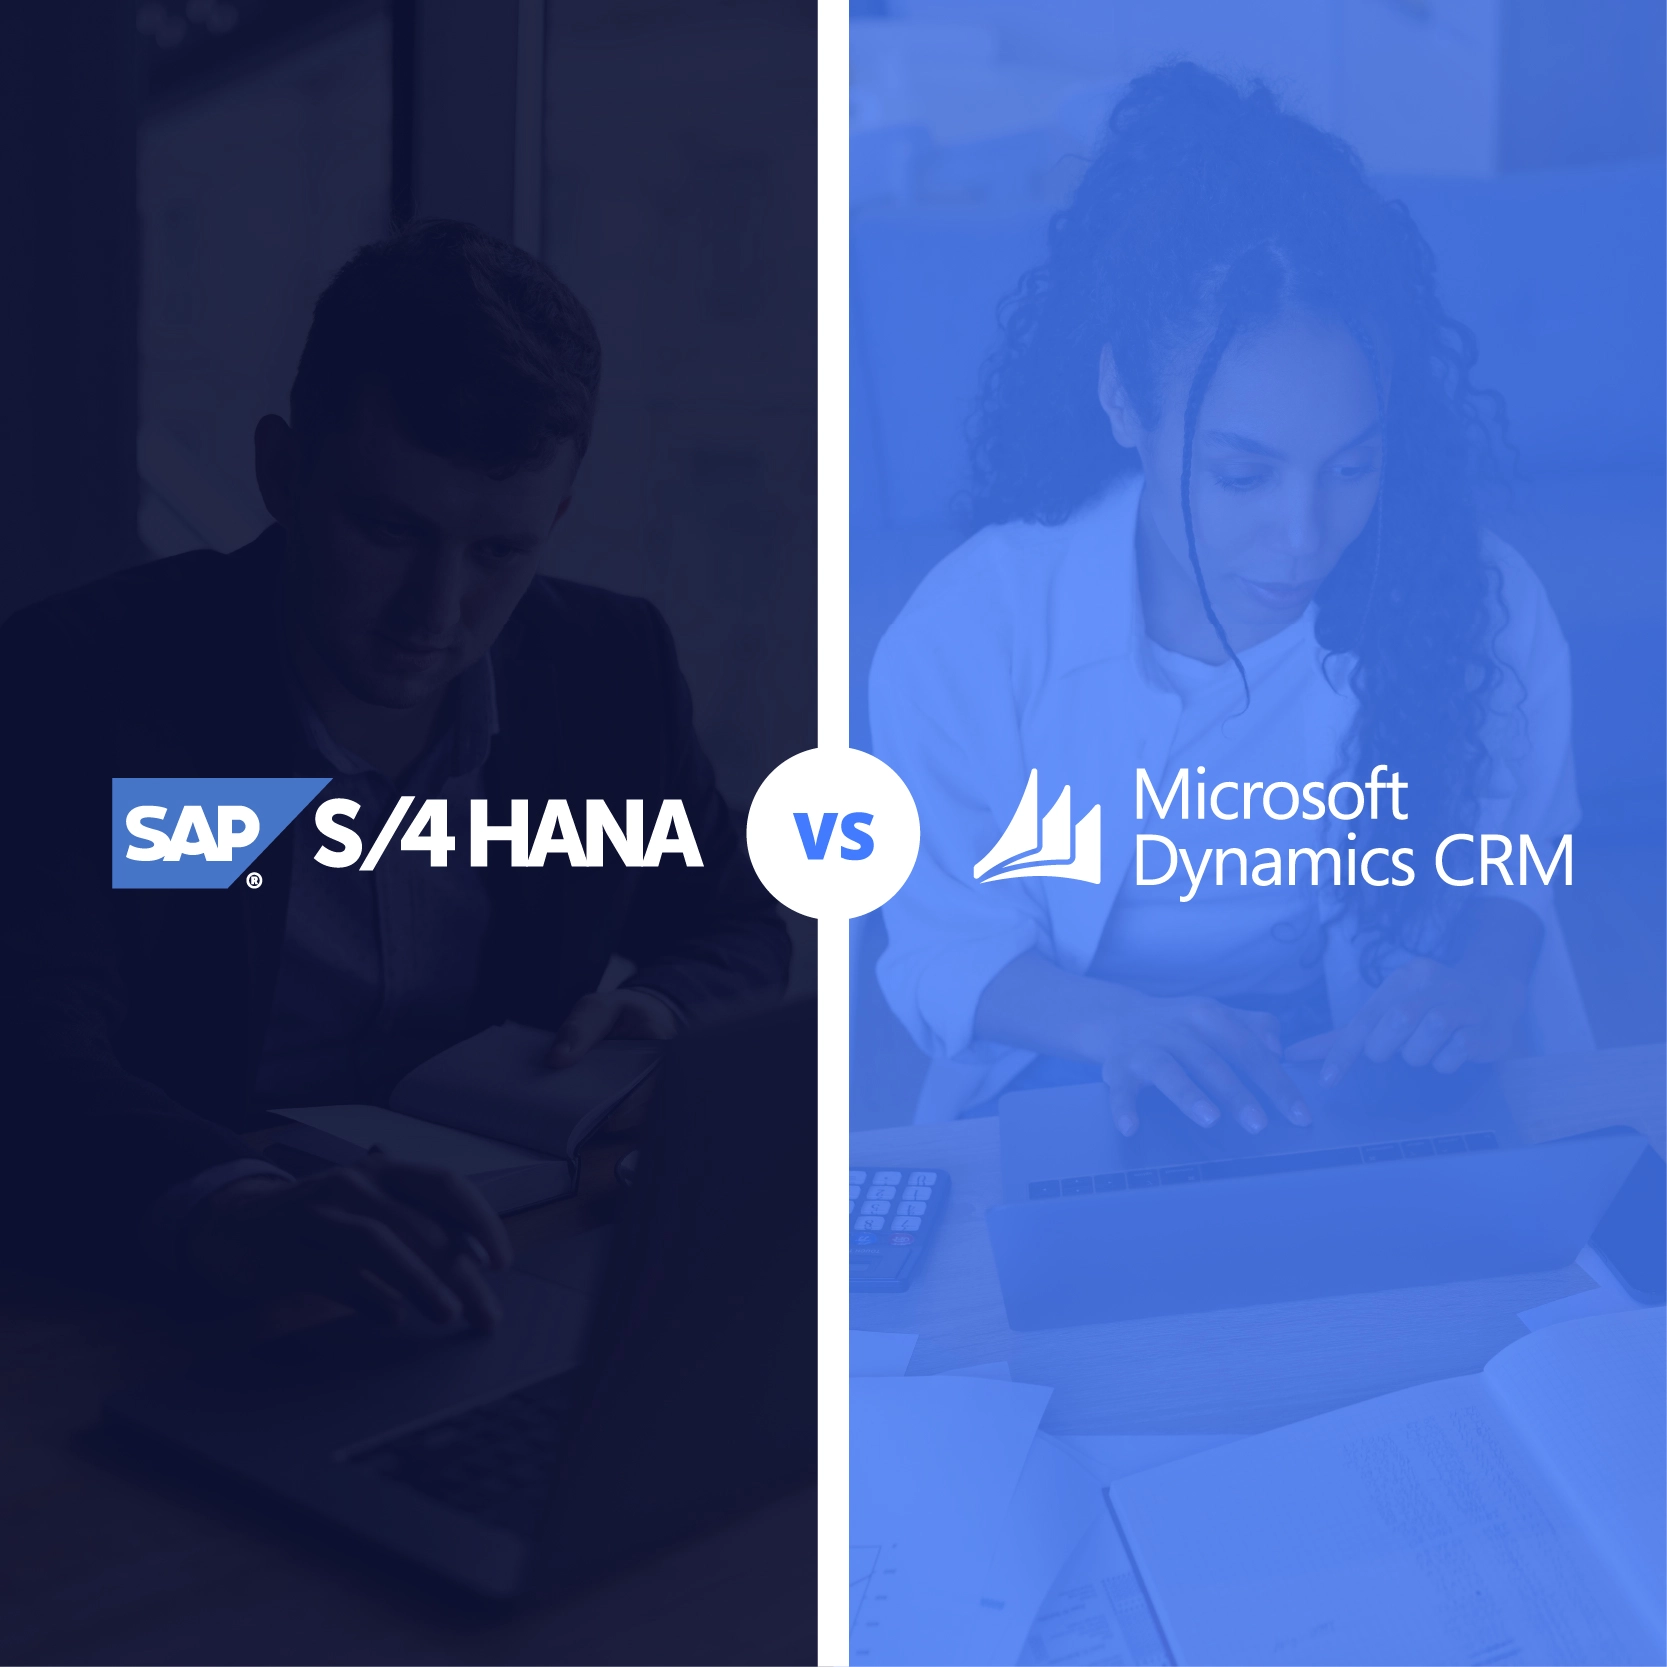 Comparacion-entre-Microsoft-Dynamics-y-SAP-S4HANA-para-una-mejor-decision-de-implementacion-